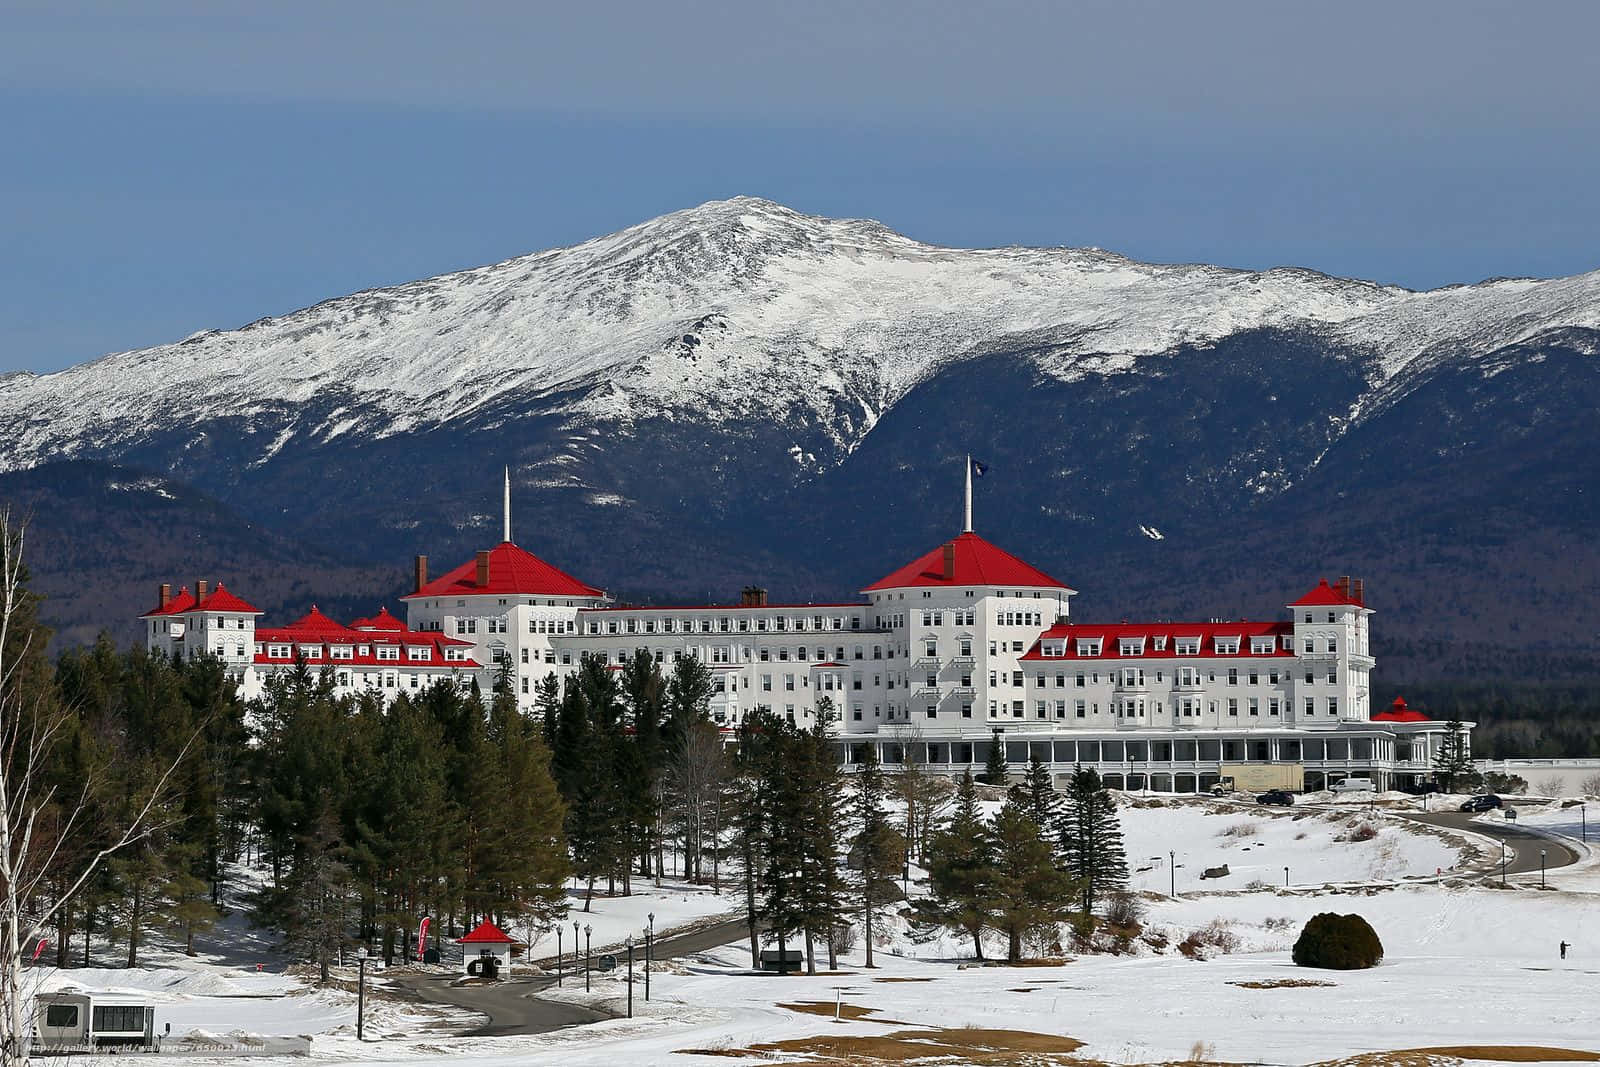 Impresionantepaisaje Invernal Del Omni Mount Washington Resort En New Hampshire Fondo de pantalla